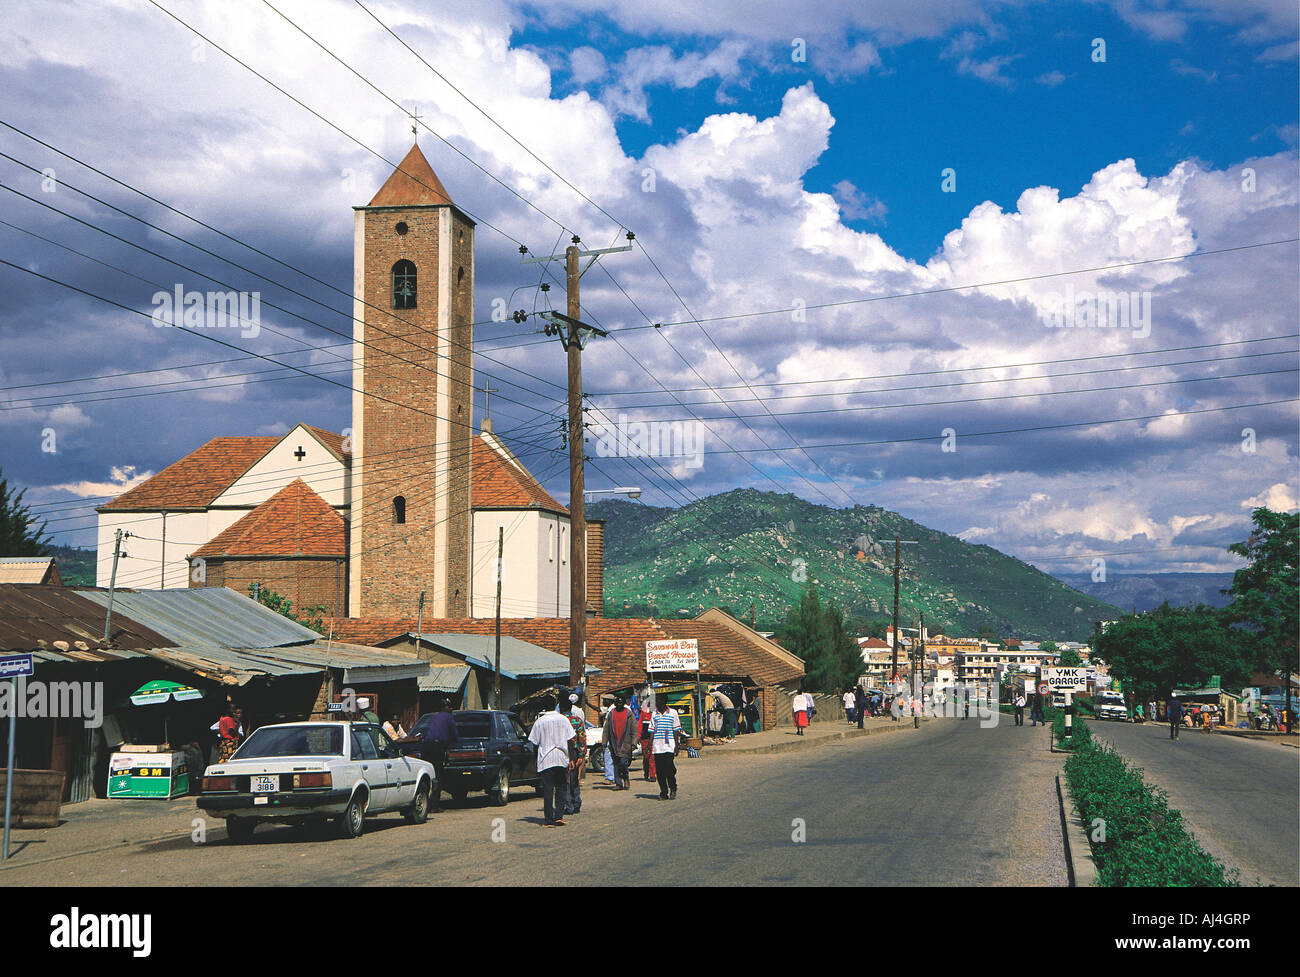 Church with bell tower and street scene lringa Tanzania Stock Photo